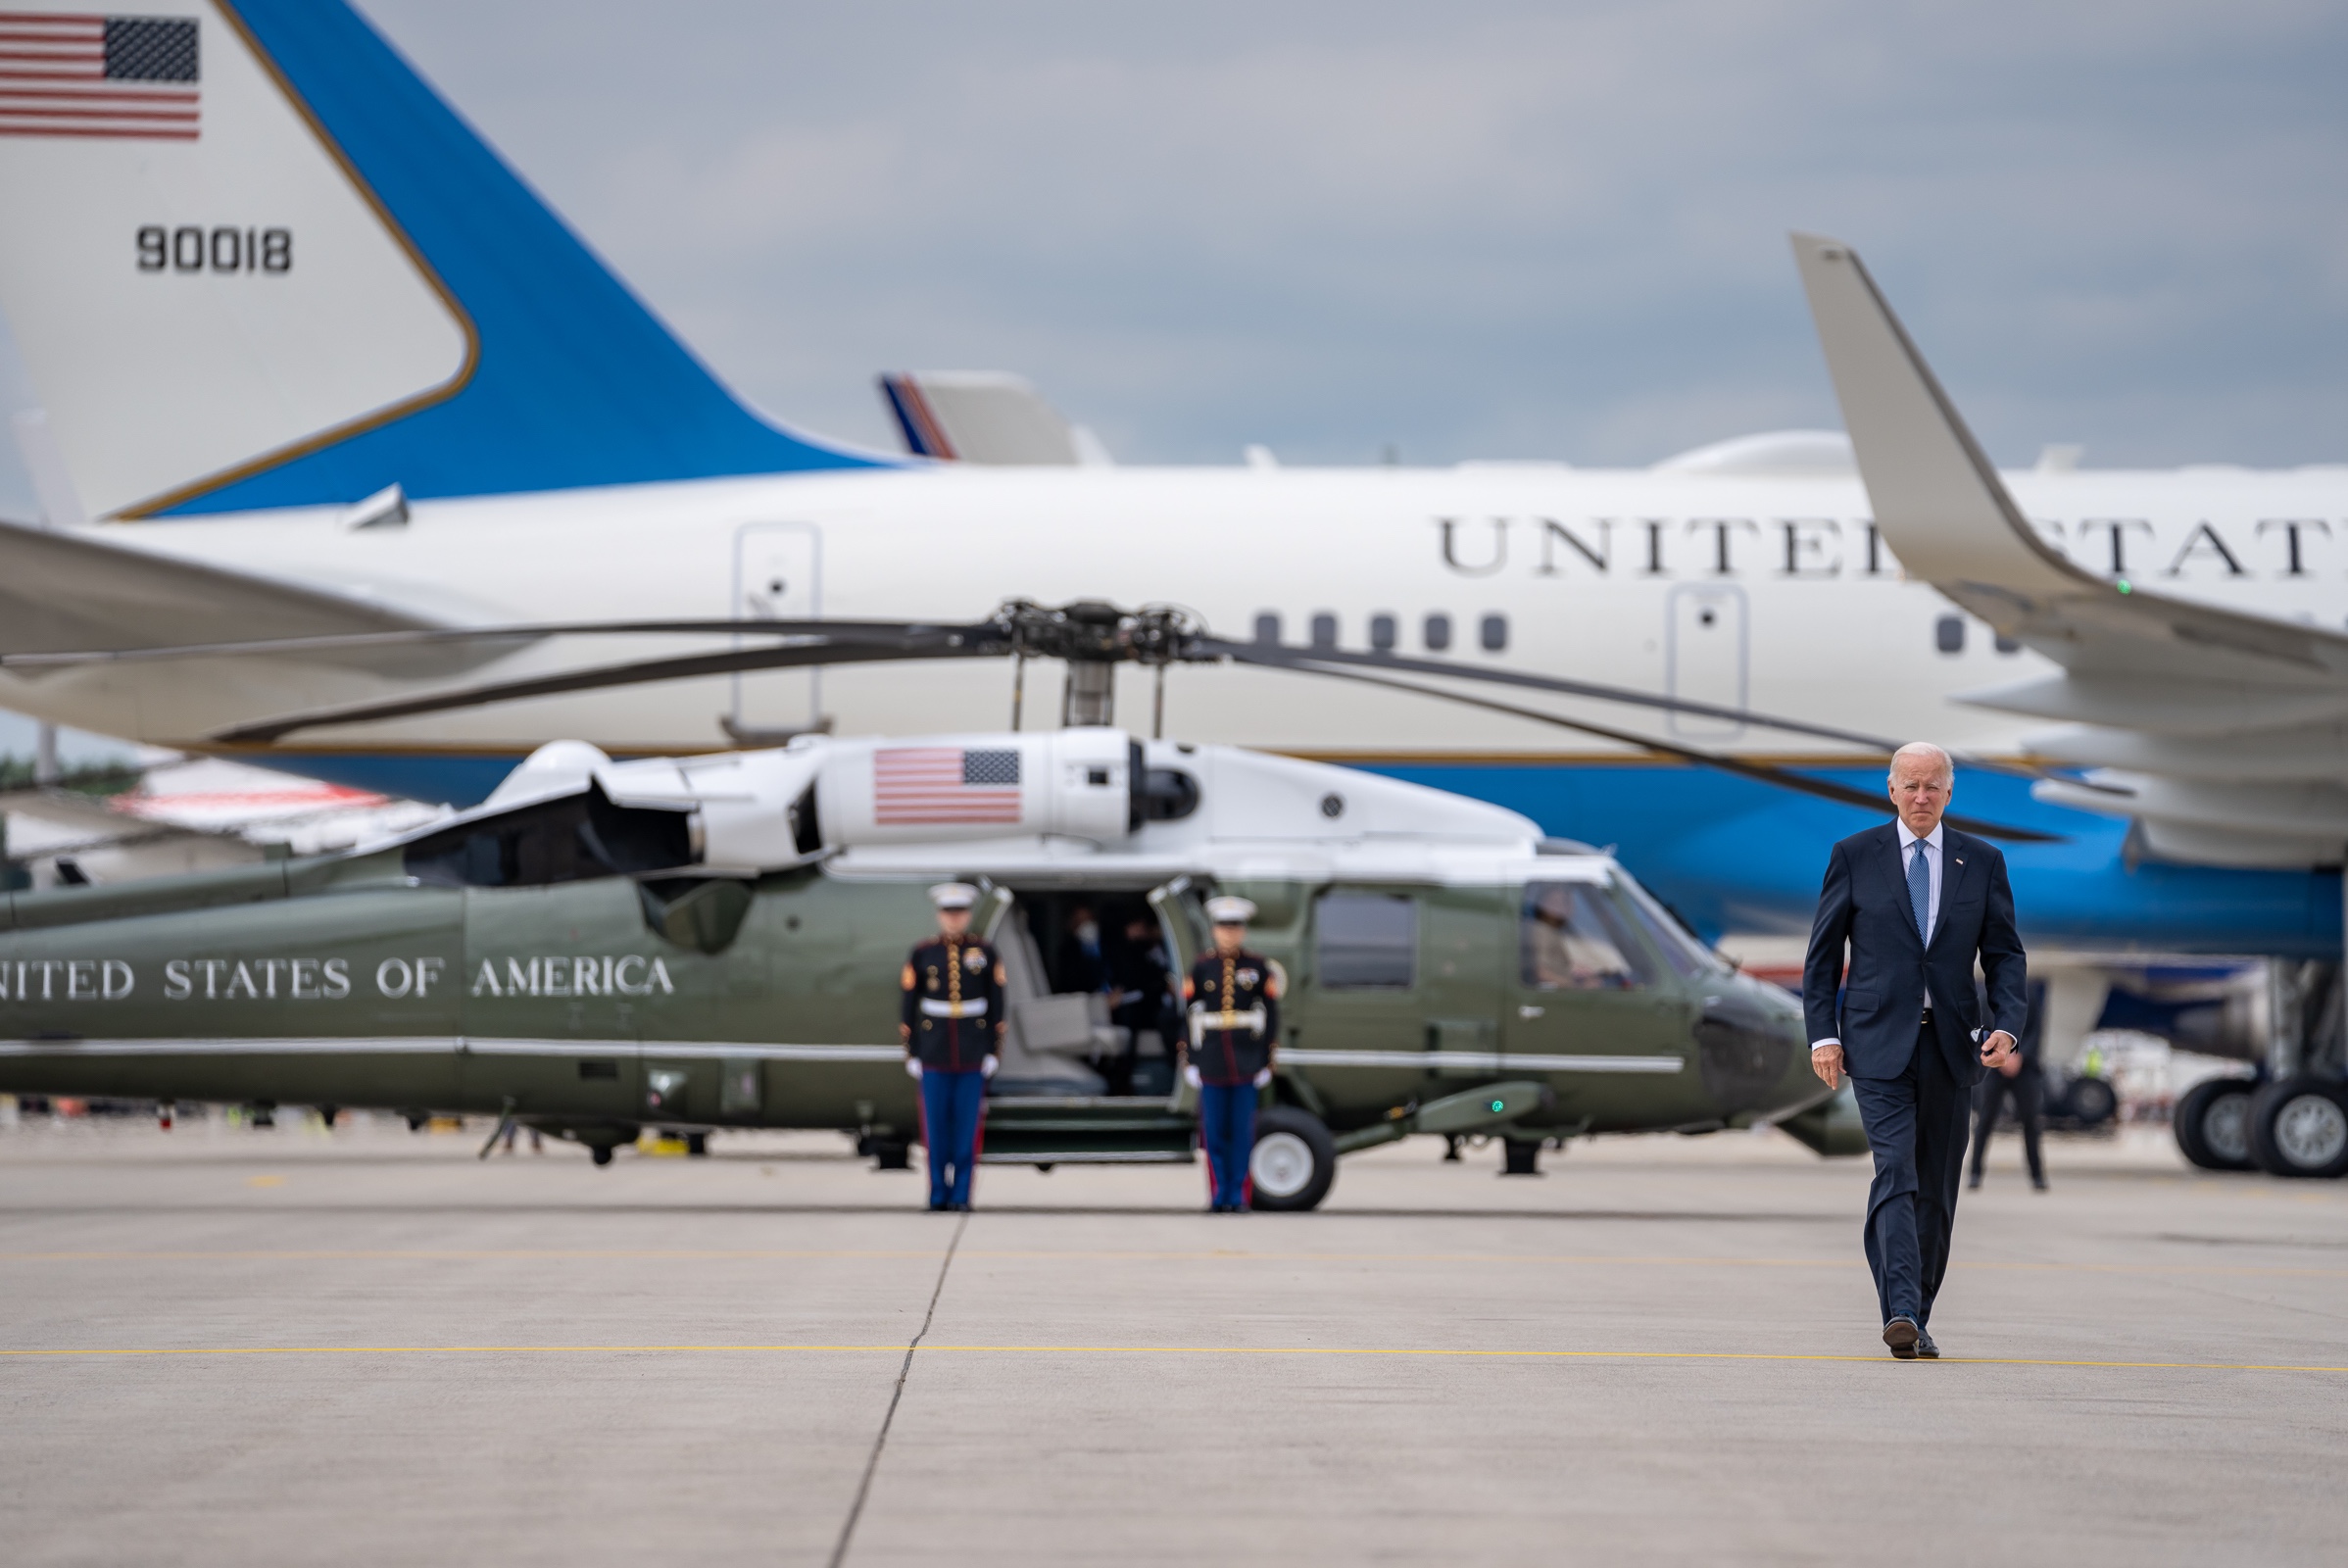 President Biden walks away from Air Force One